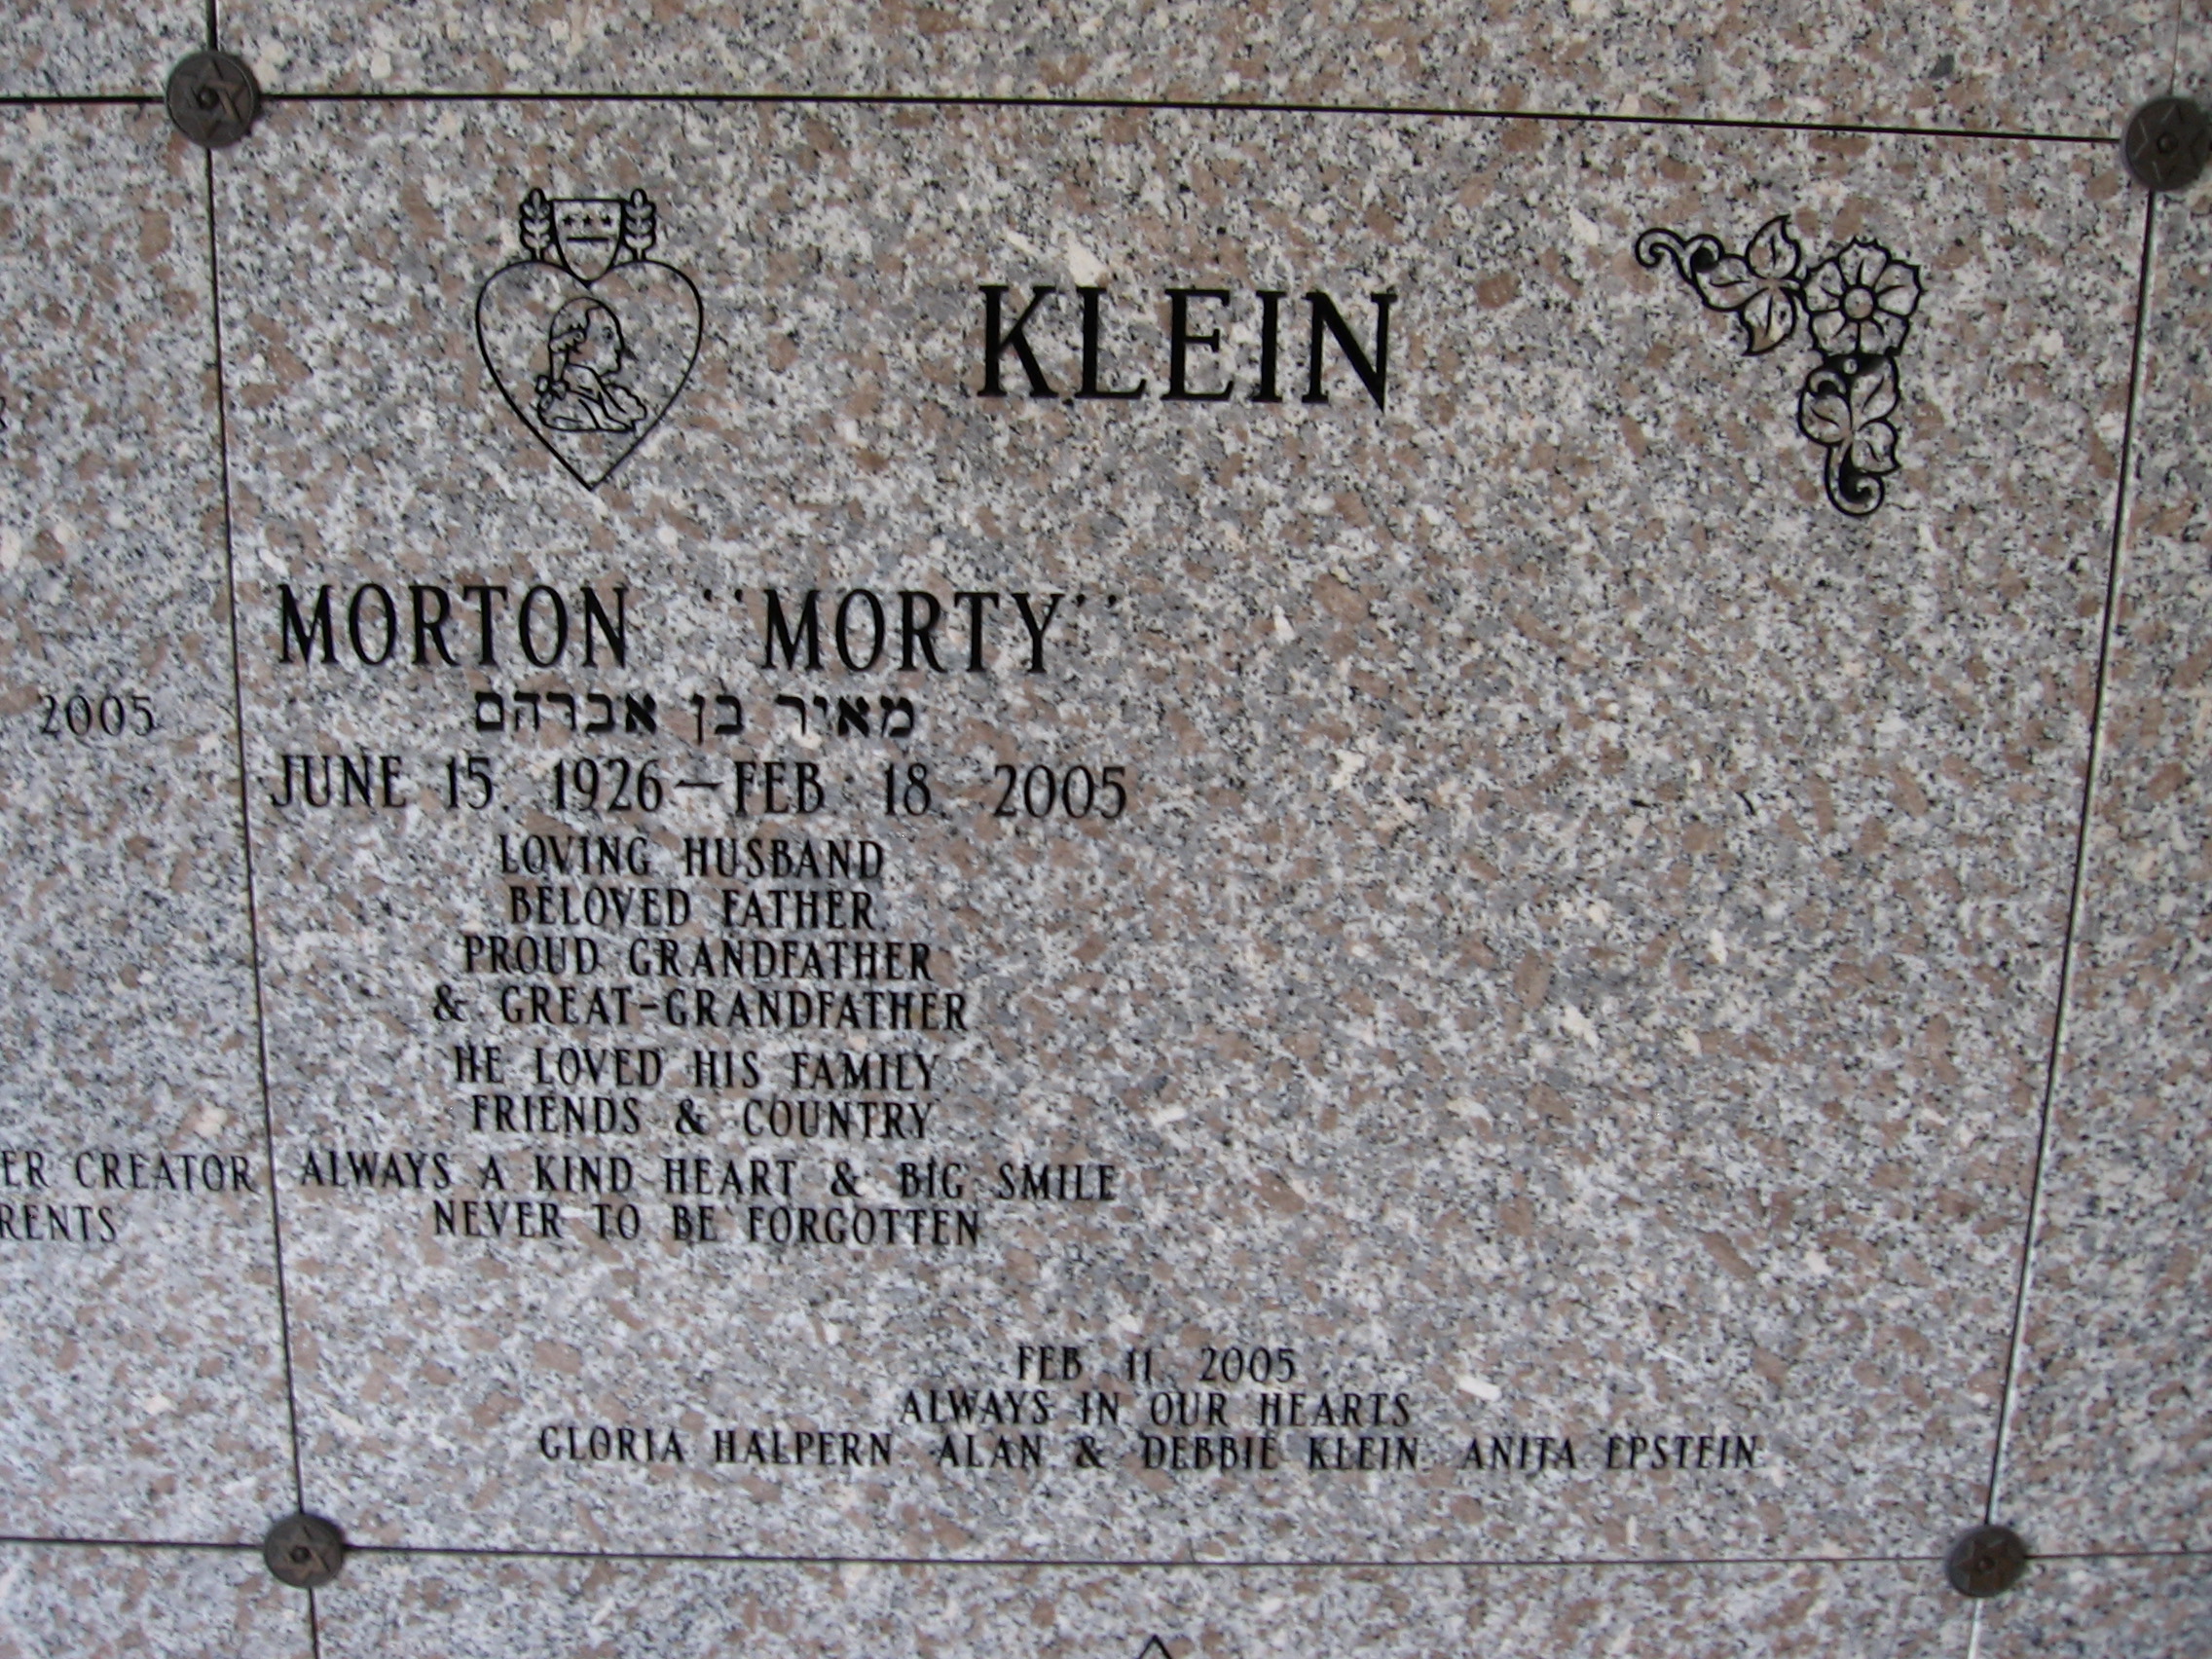 Morton "Morty" Klein